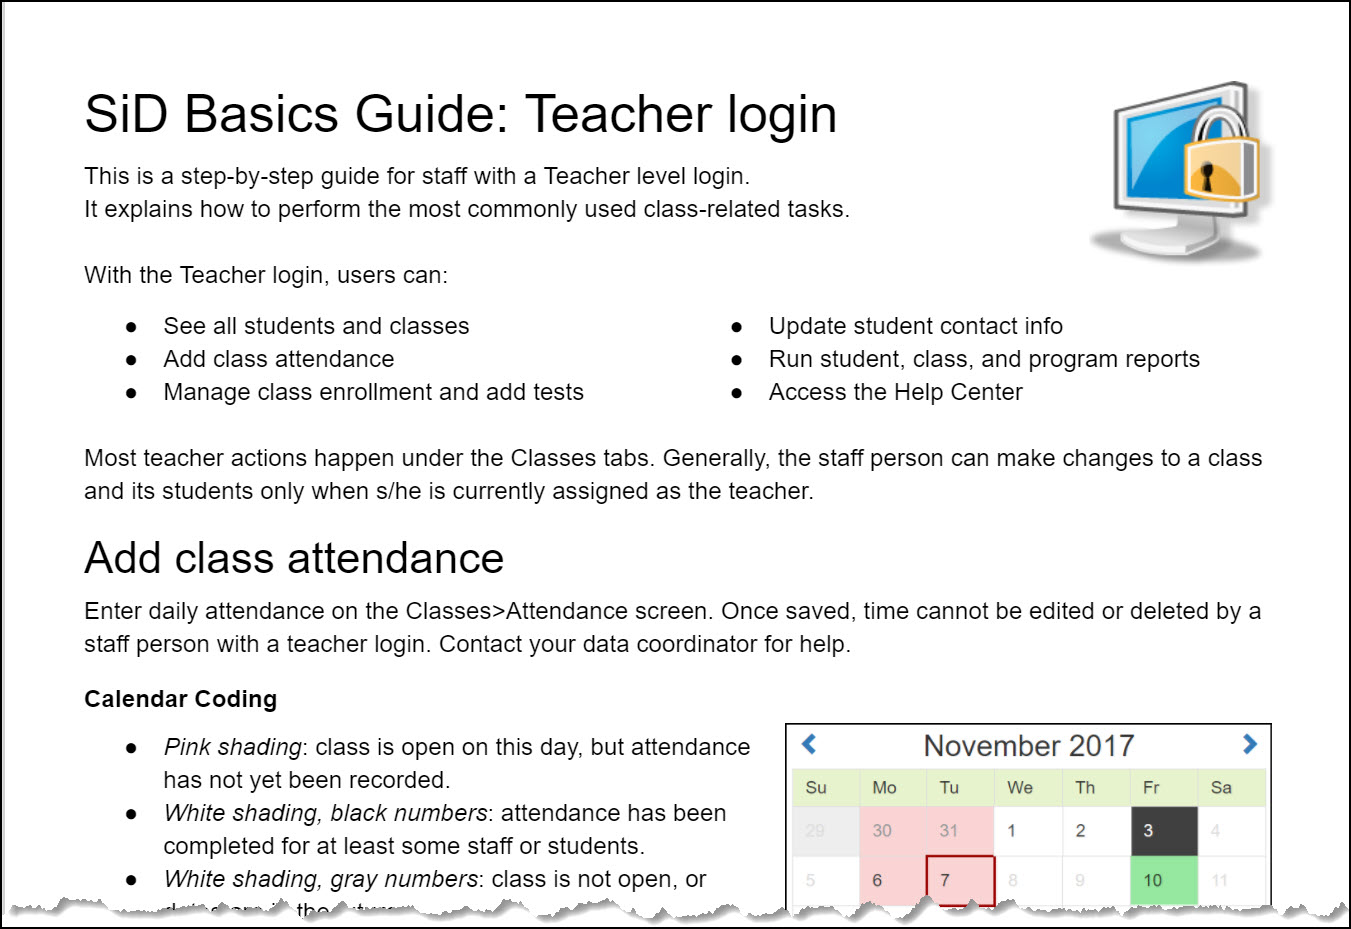 SiD_Basics_Guide_Teacher_login_clip.jpg